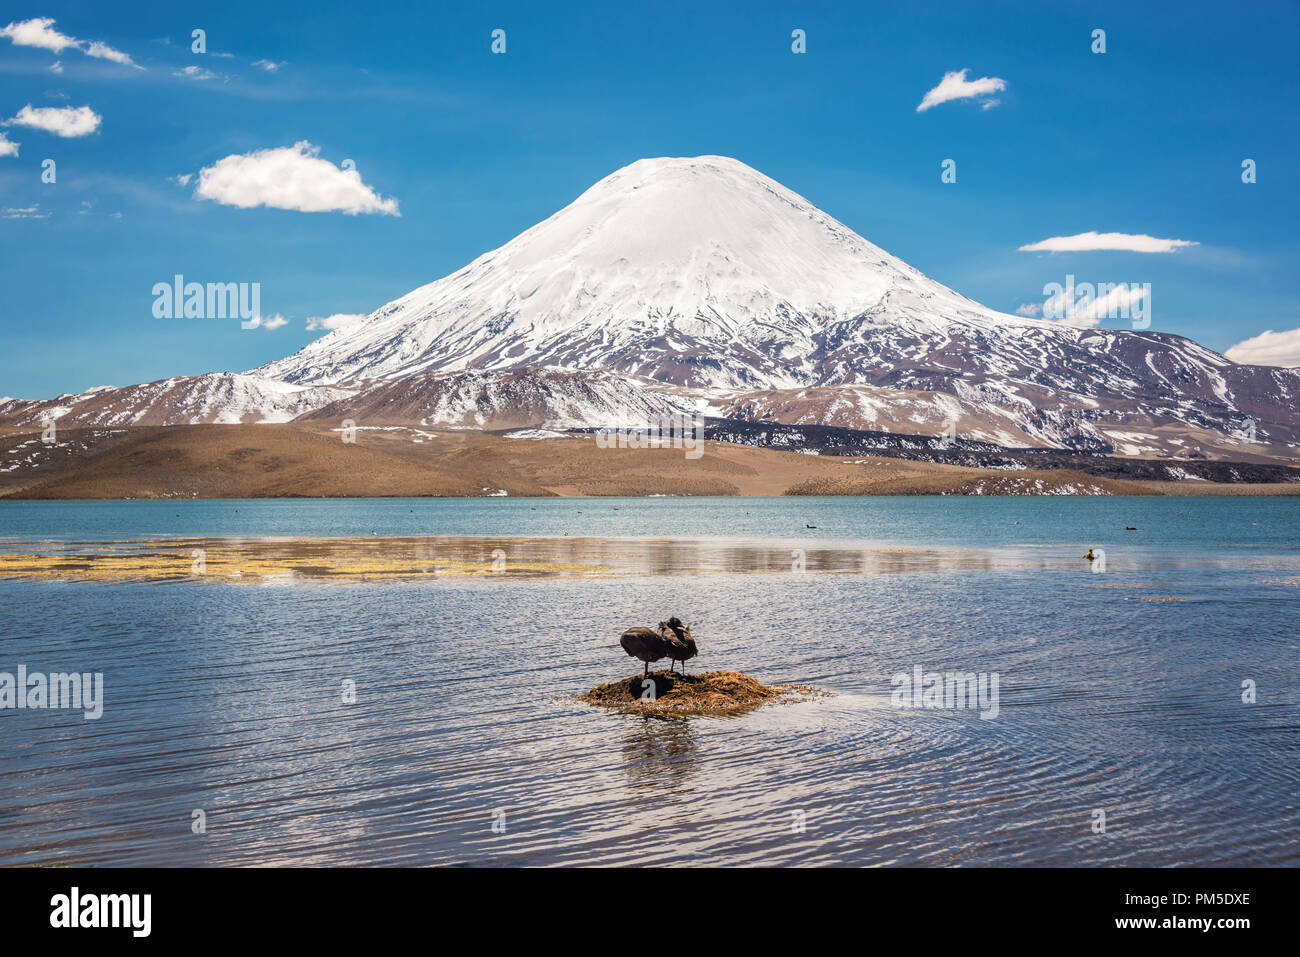 Andengemeinschaft Blässhühner auf chungara See, Parinacota Vulkan, Chile Stockfoto